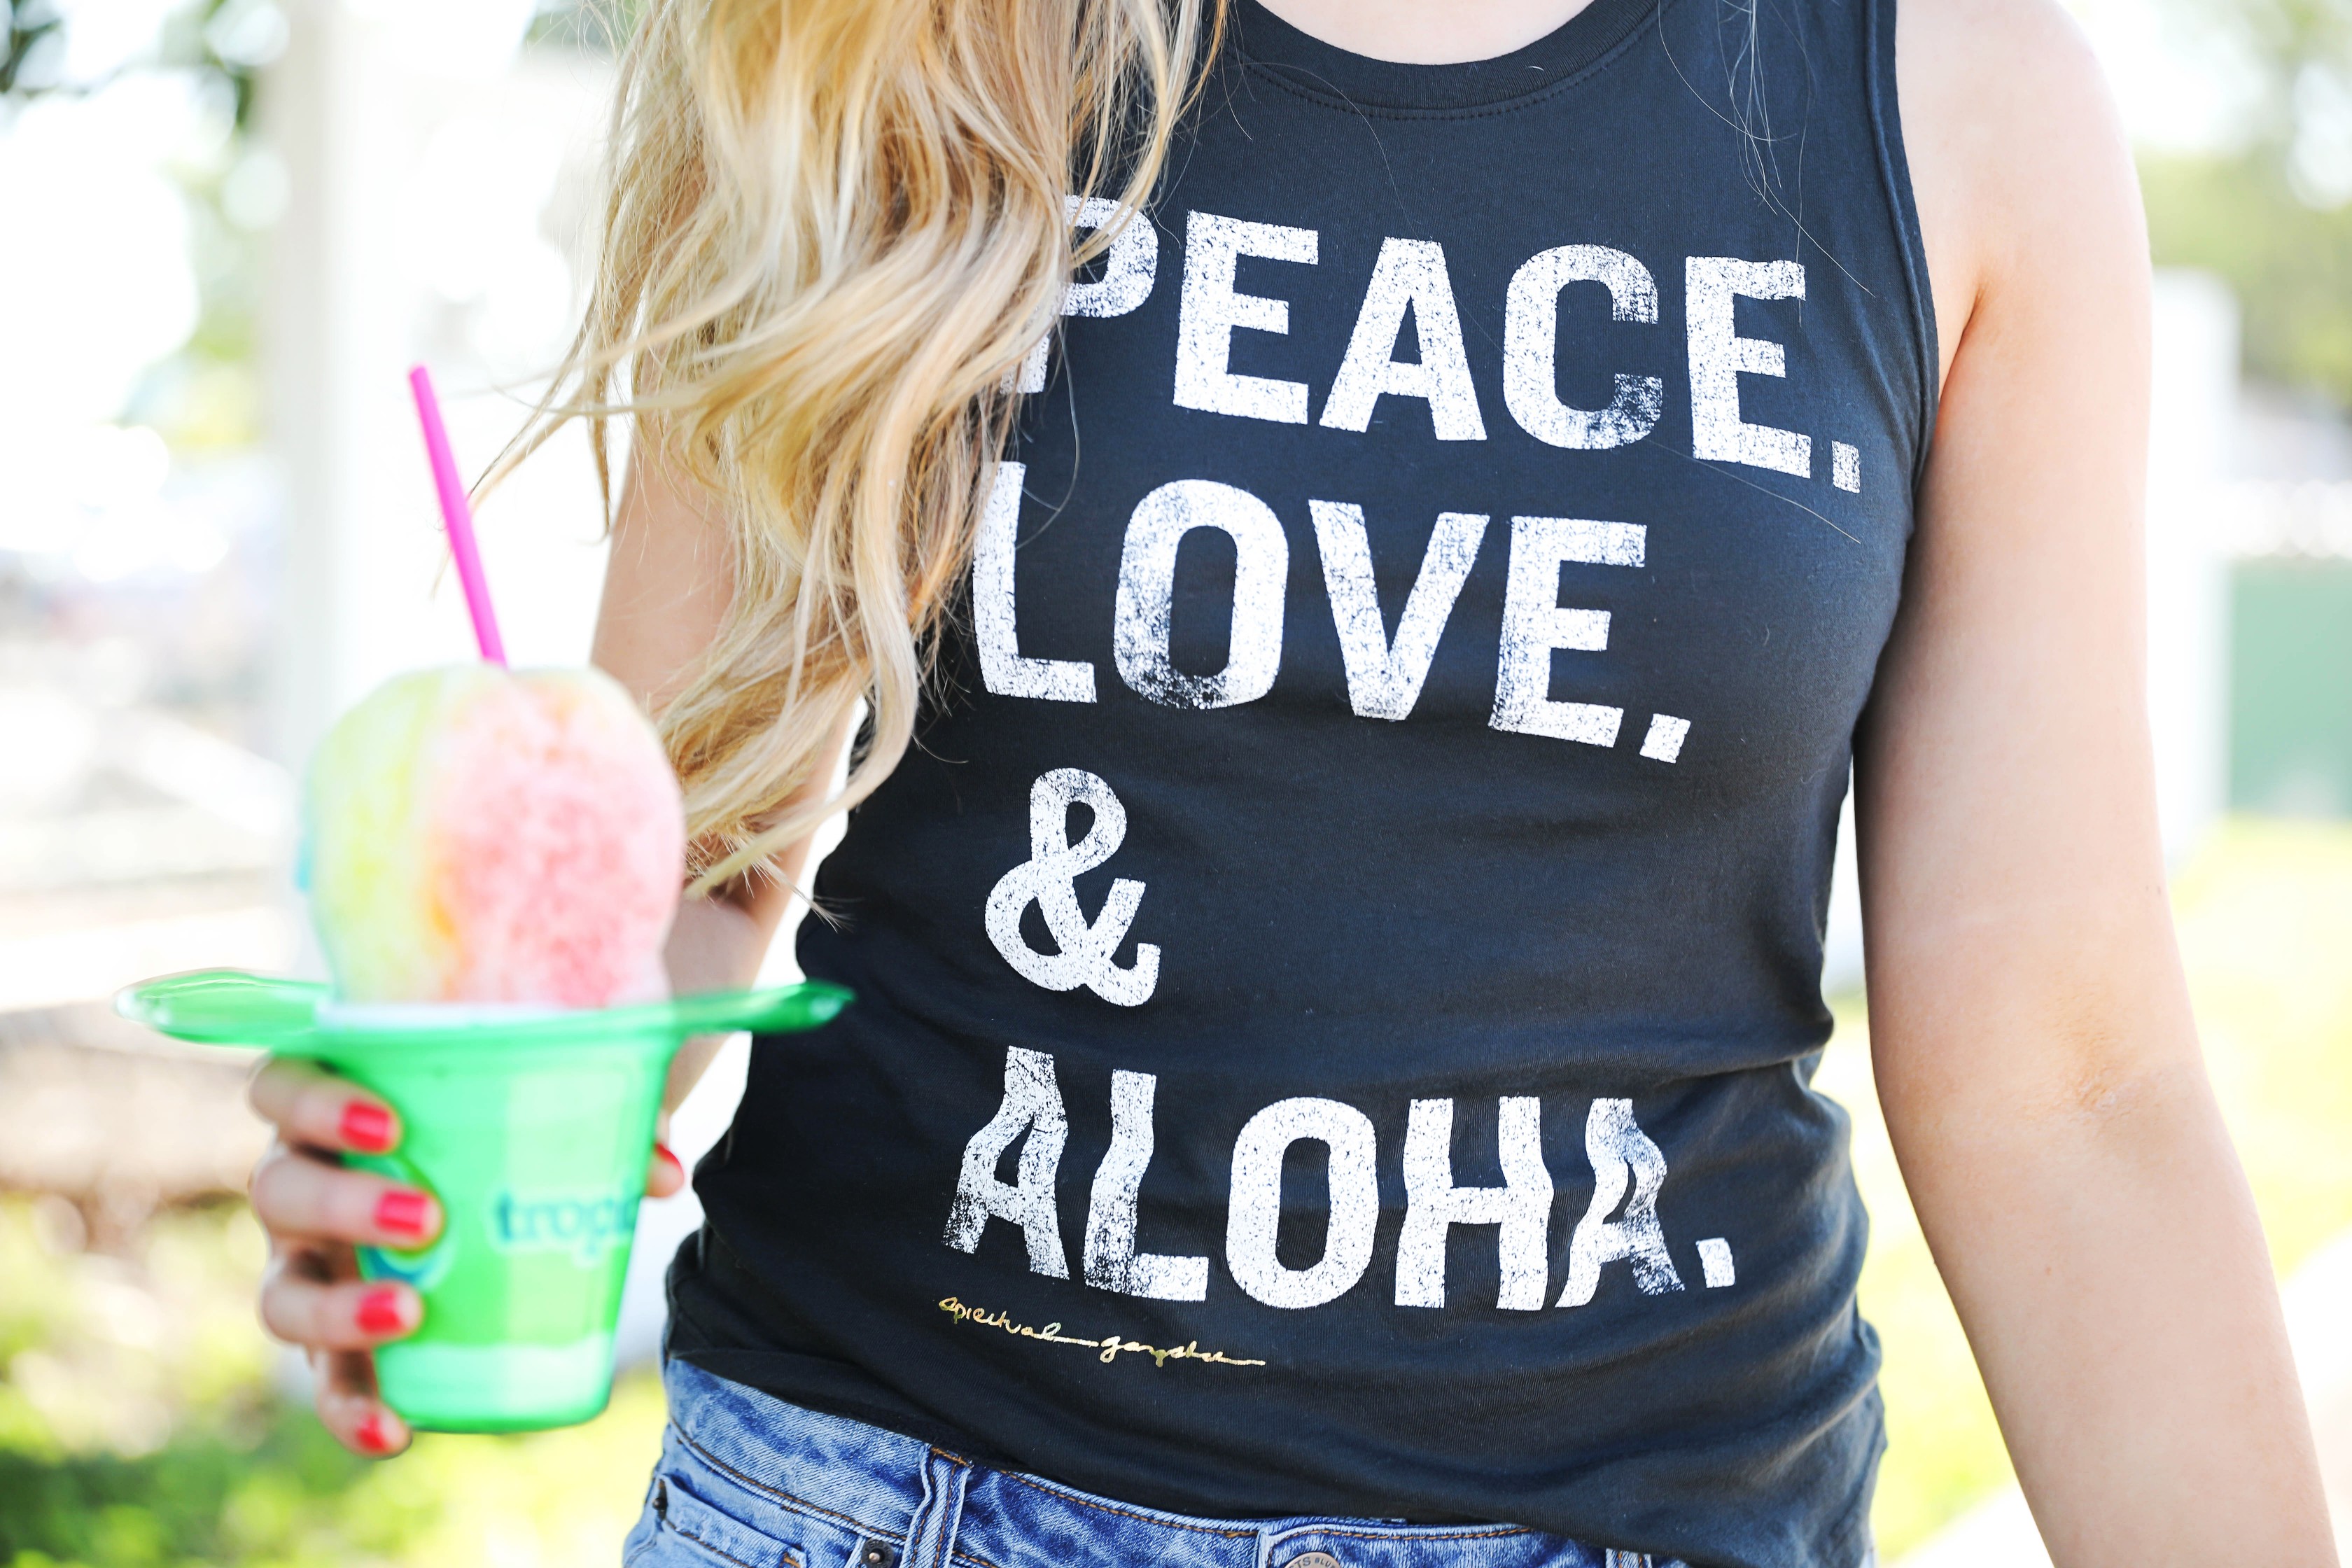 Aloha Summer Spiritual Gangster Top with snow cone by fashion blogger Lauren Lindmark on fashion blog daily dose of charm dailydoseofcharm.com